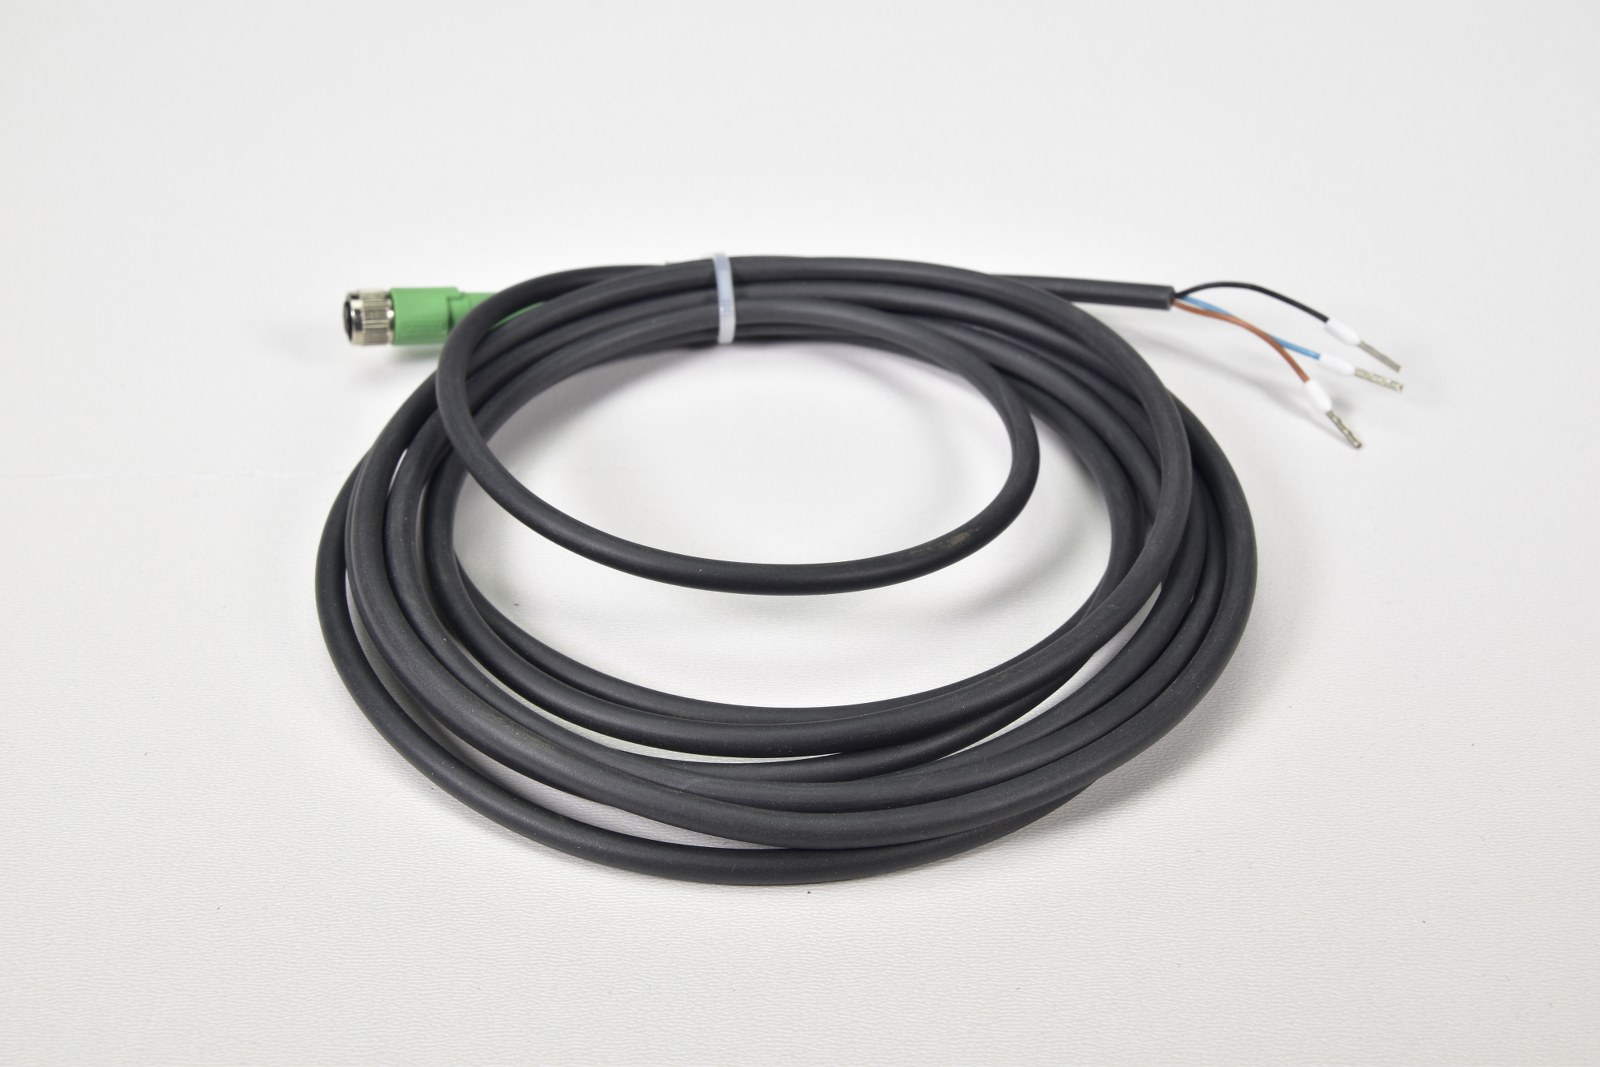 $6.50 ea Phoenix Contact sensor cable E221474 Lot of 4 $26 